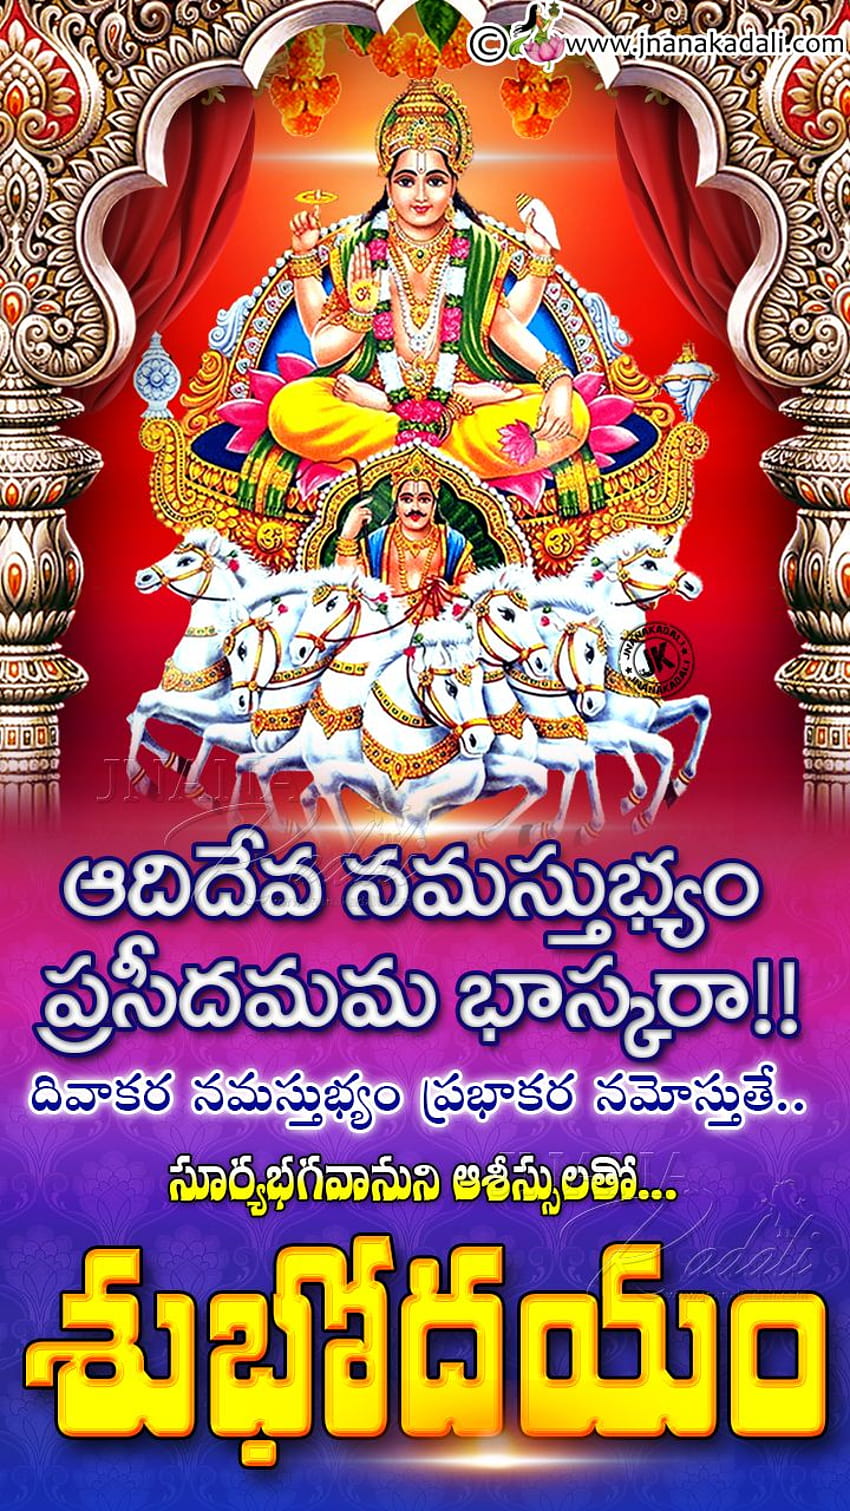 Surya Bhagavan With Good Morning Greetings in Telugu, lord surya ...